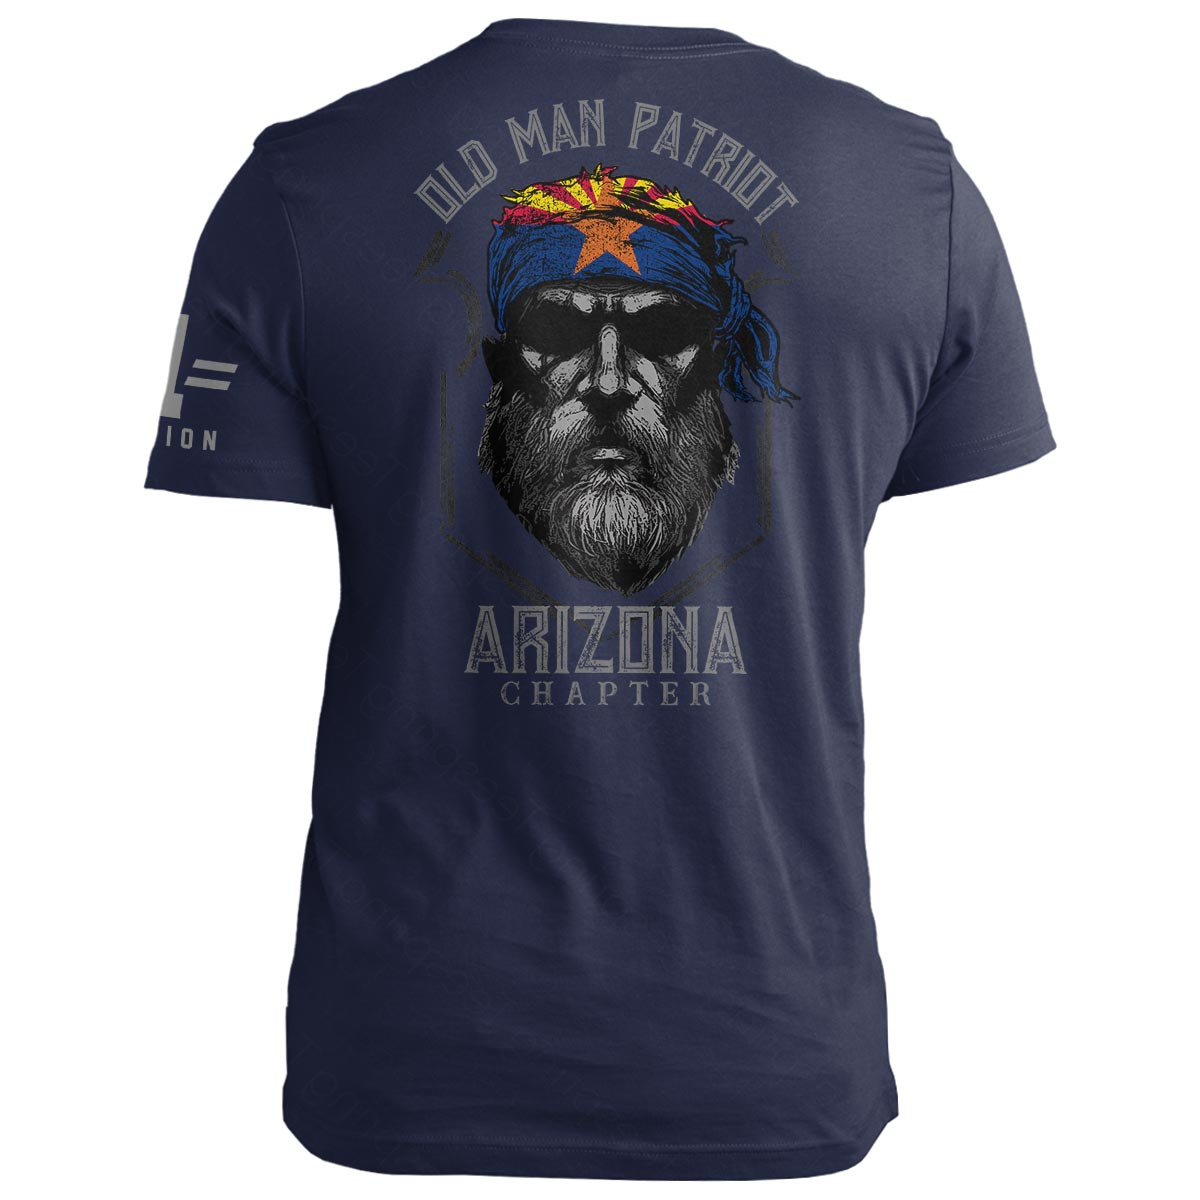 Arizona Old Man Patriot